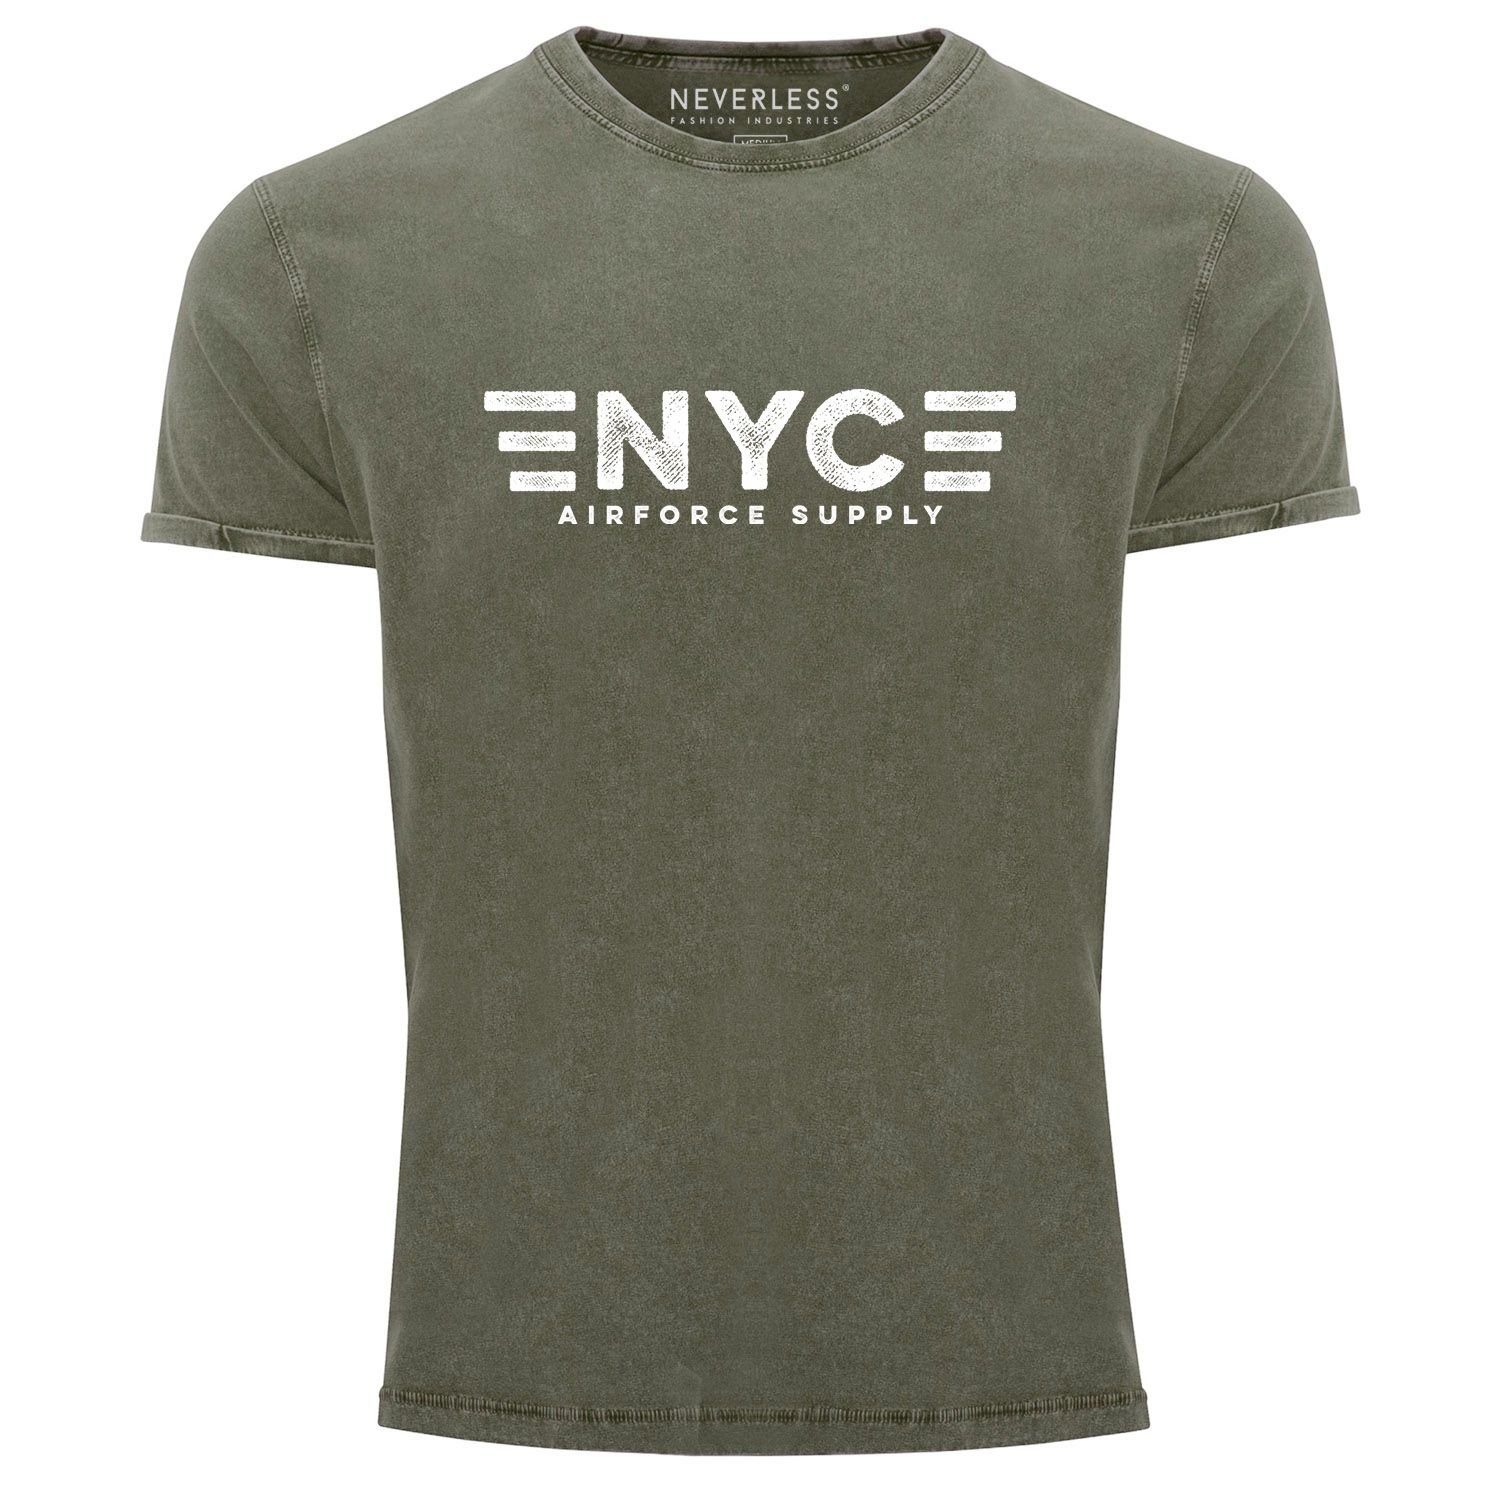 Neverless Print-Shirt Herren Vintage Shirt Aufdruck NYC New York City Airforce Supply Print Printshirt T-Shirt Used Look Slim Fit Neverless® mit Print oliv | T-Shirts